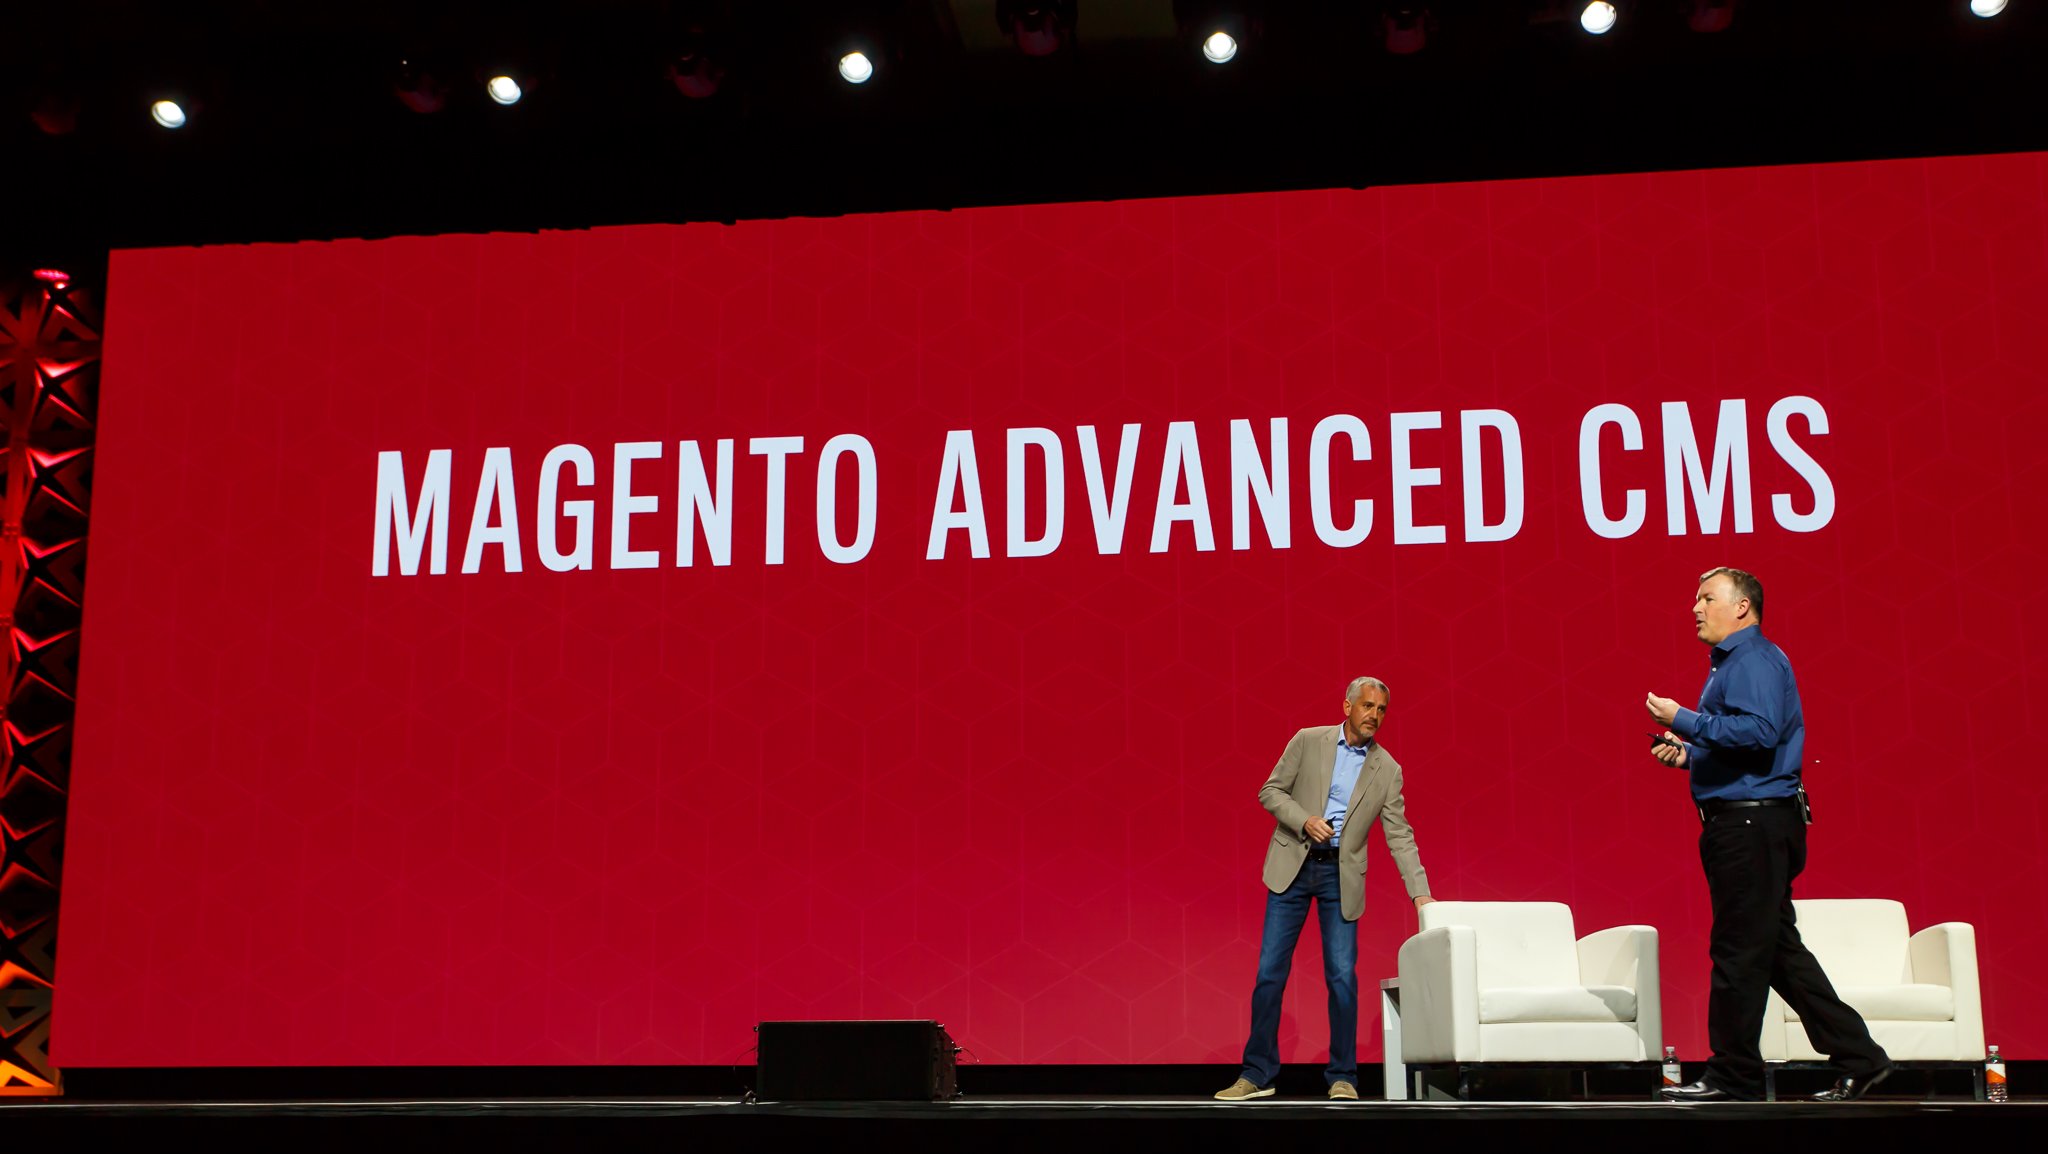 Magento Advanced CMS Announcement 